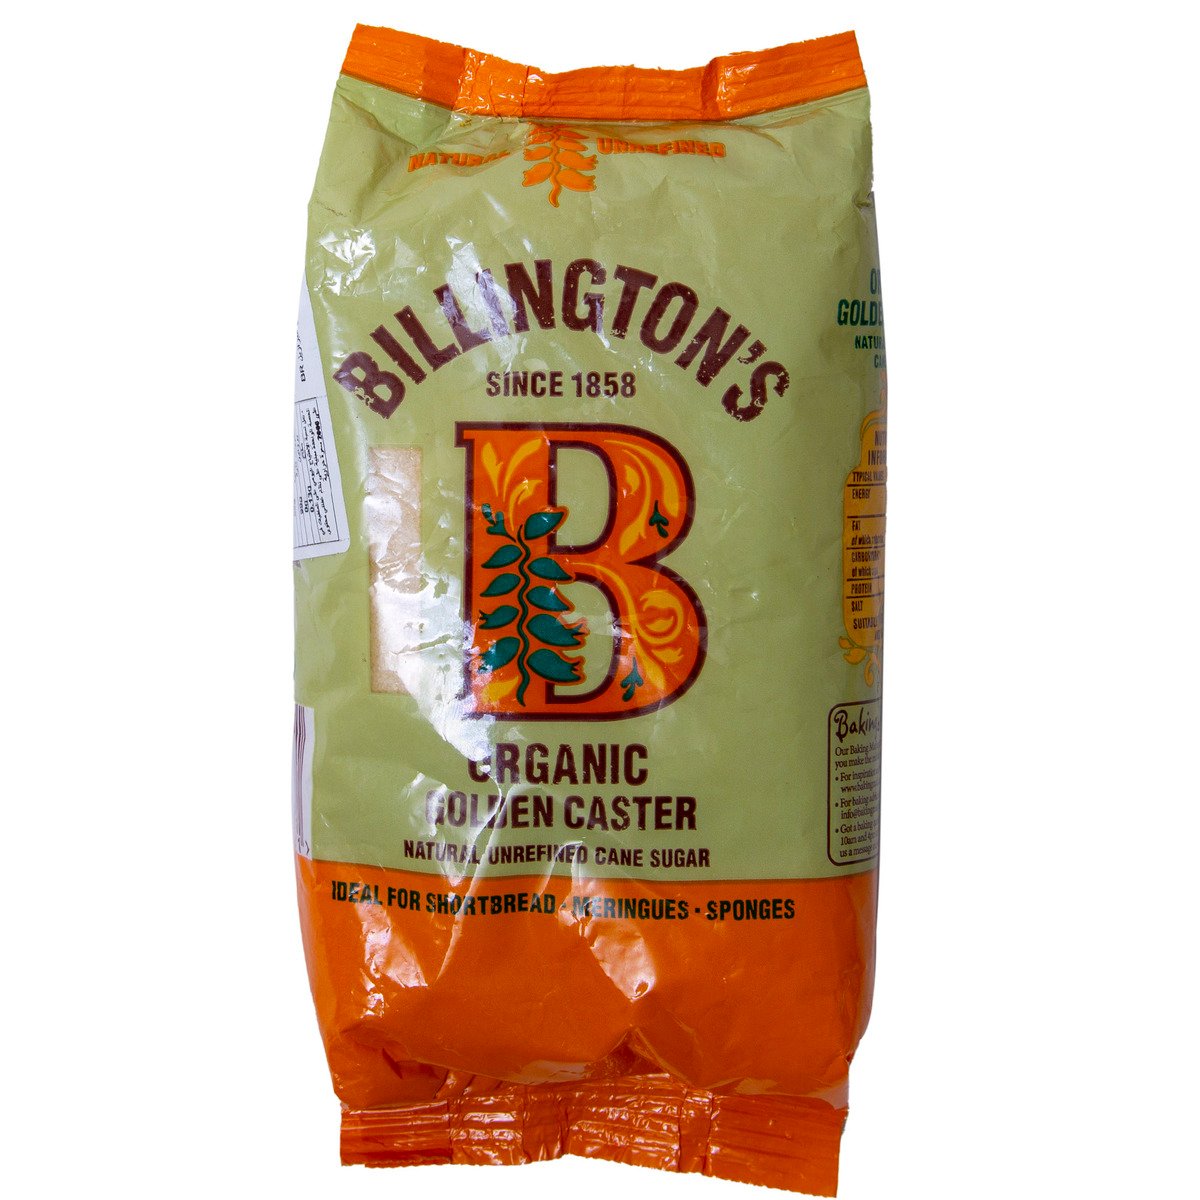 Billington's Organic Golden Caster 500 g